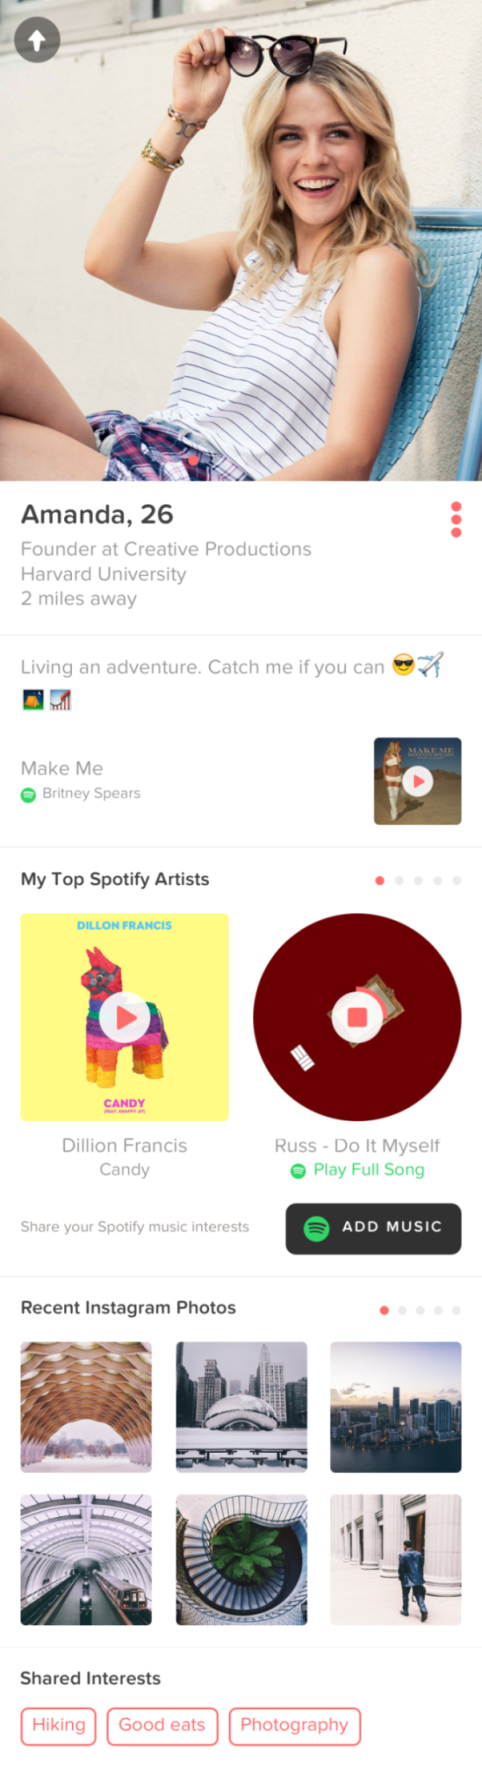 Interface - Tinder e Spotify